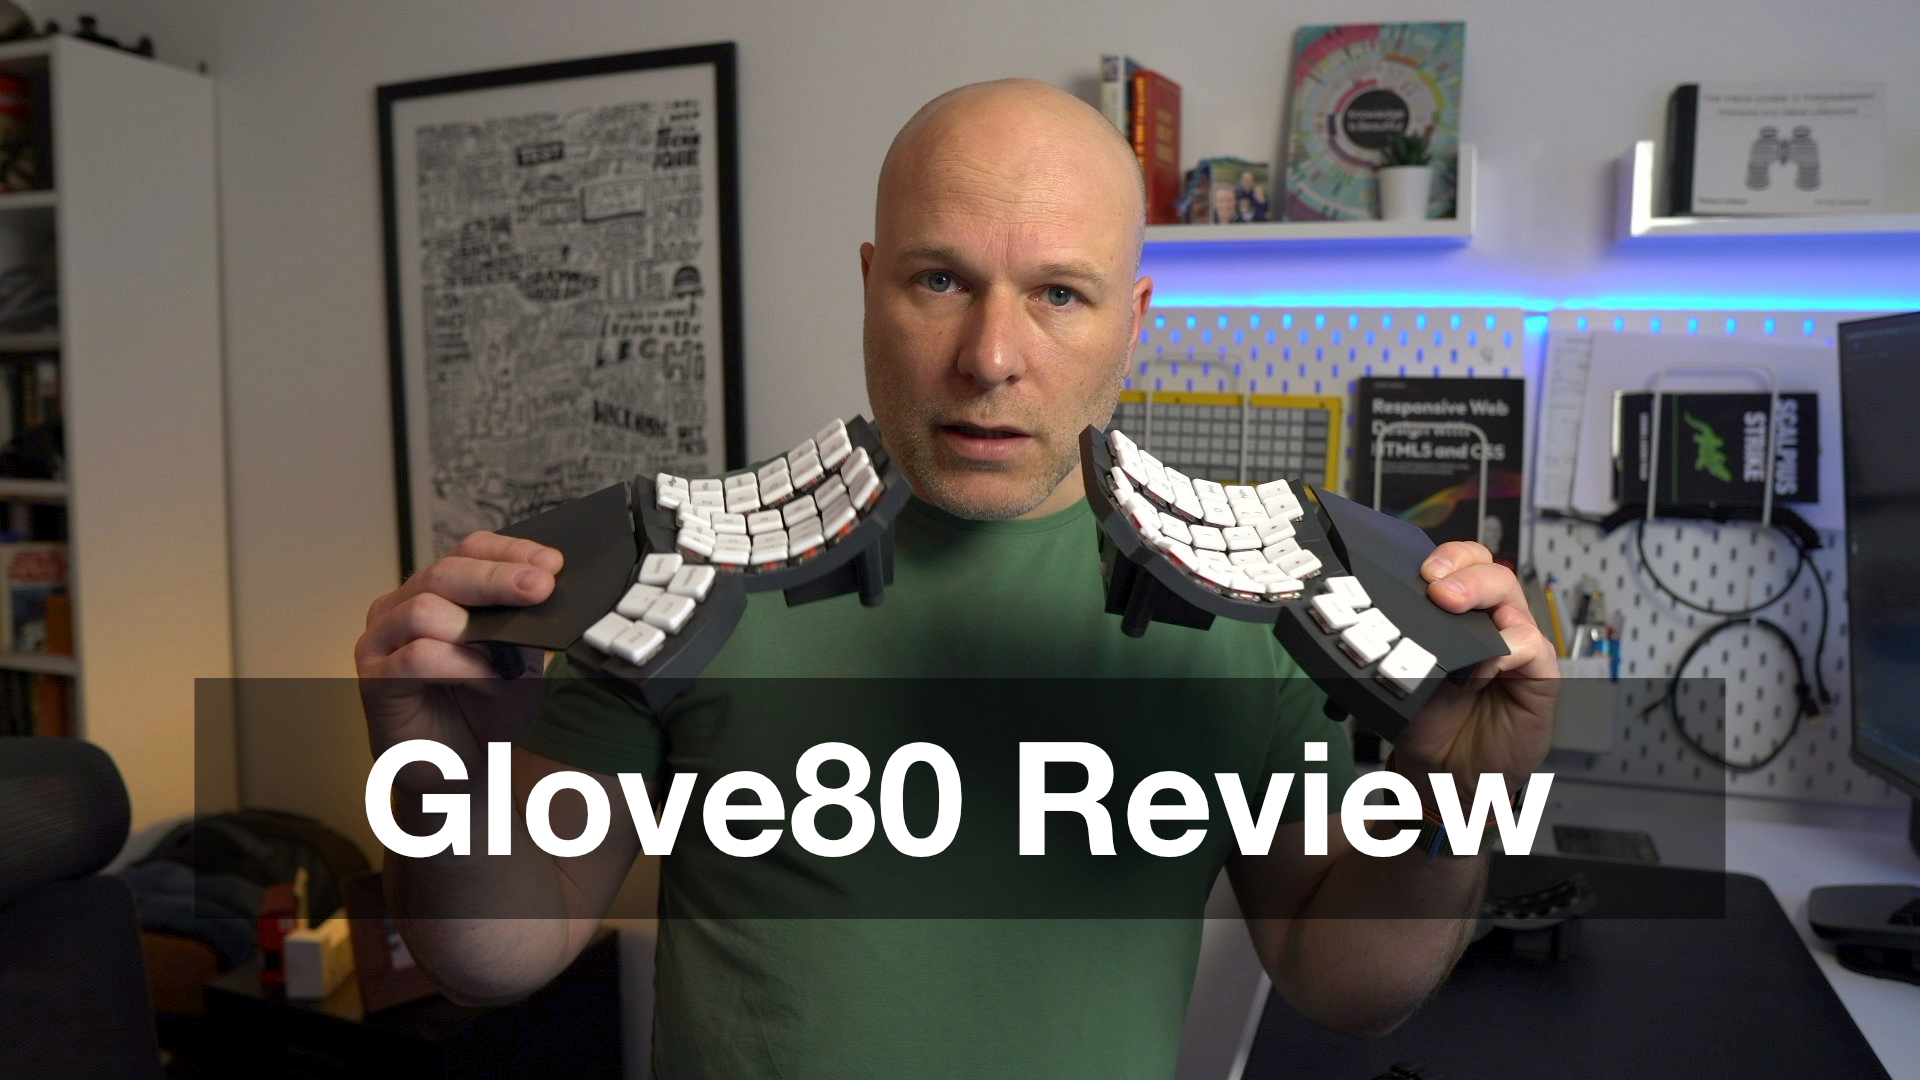 Holding the Glove80 keyboard